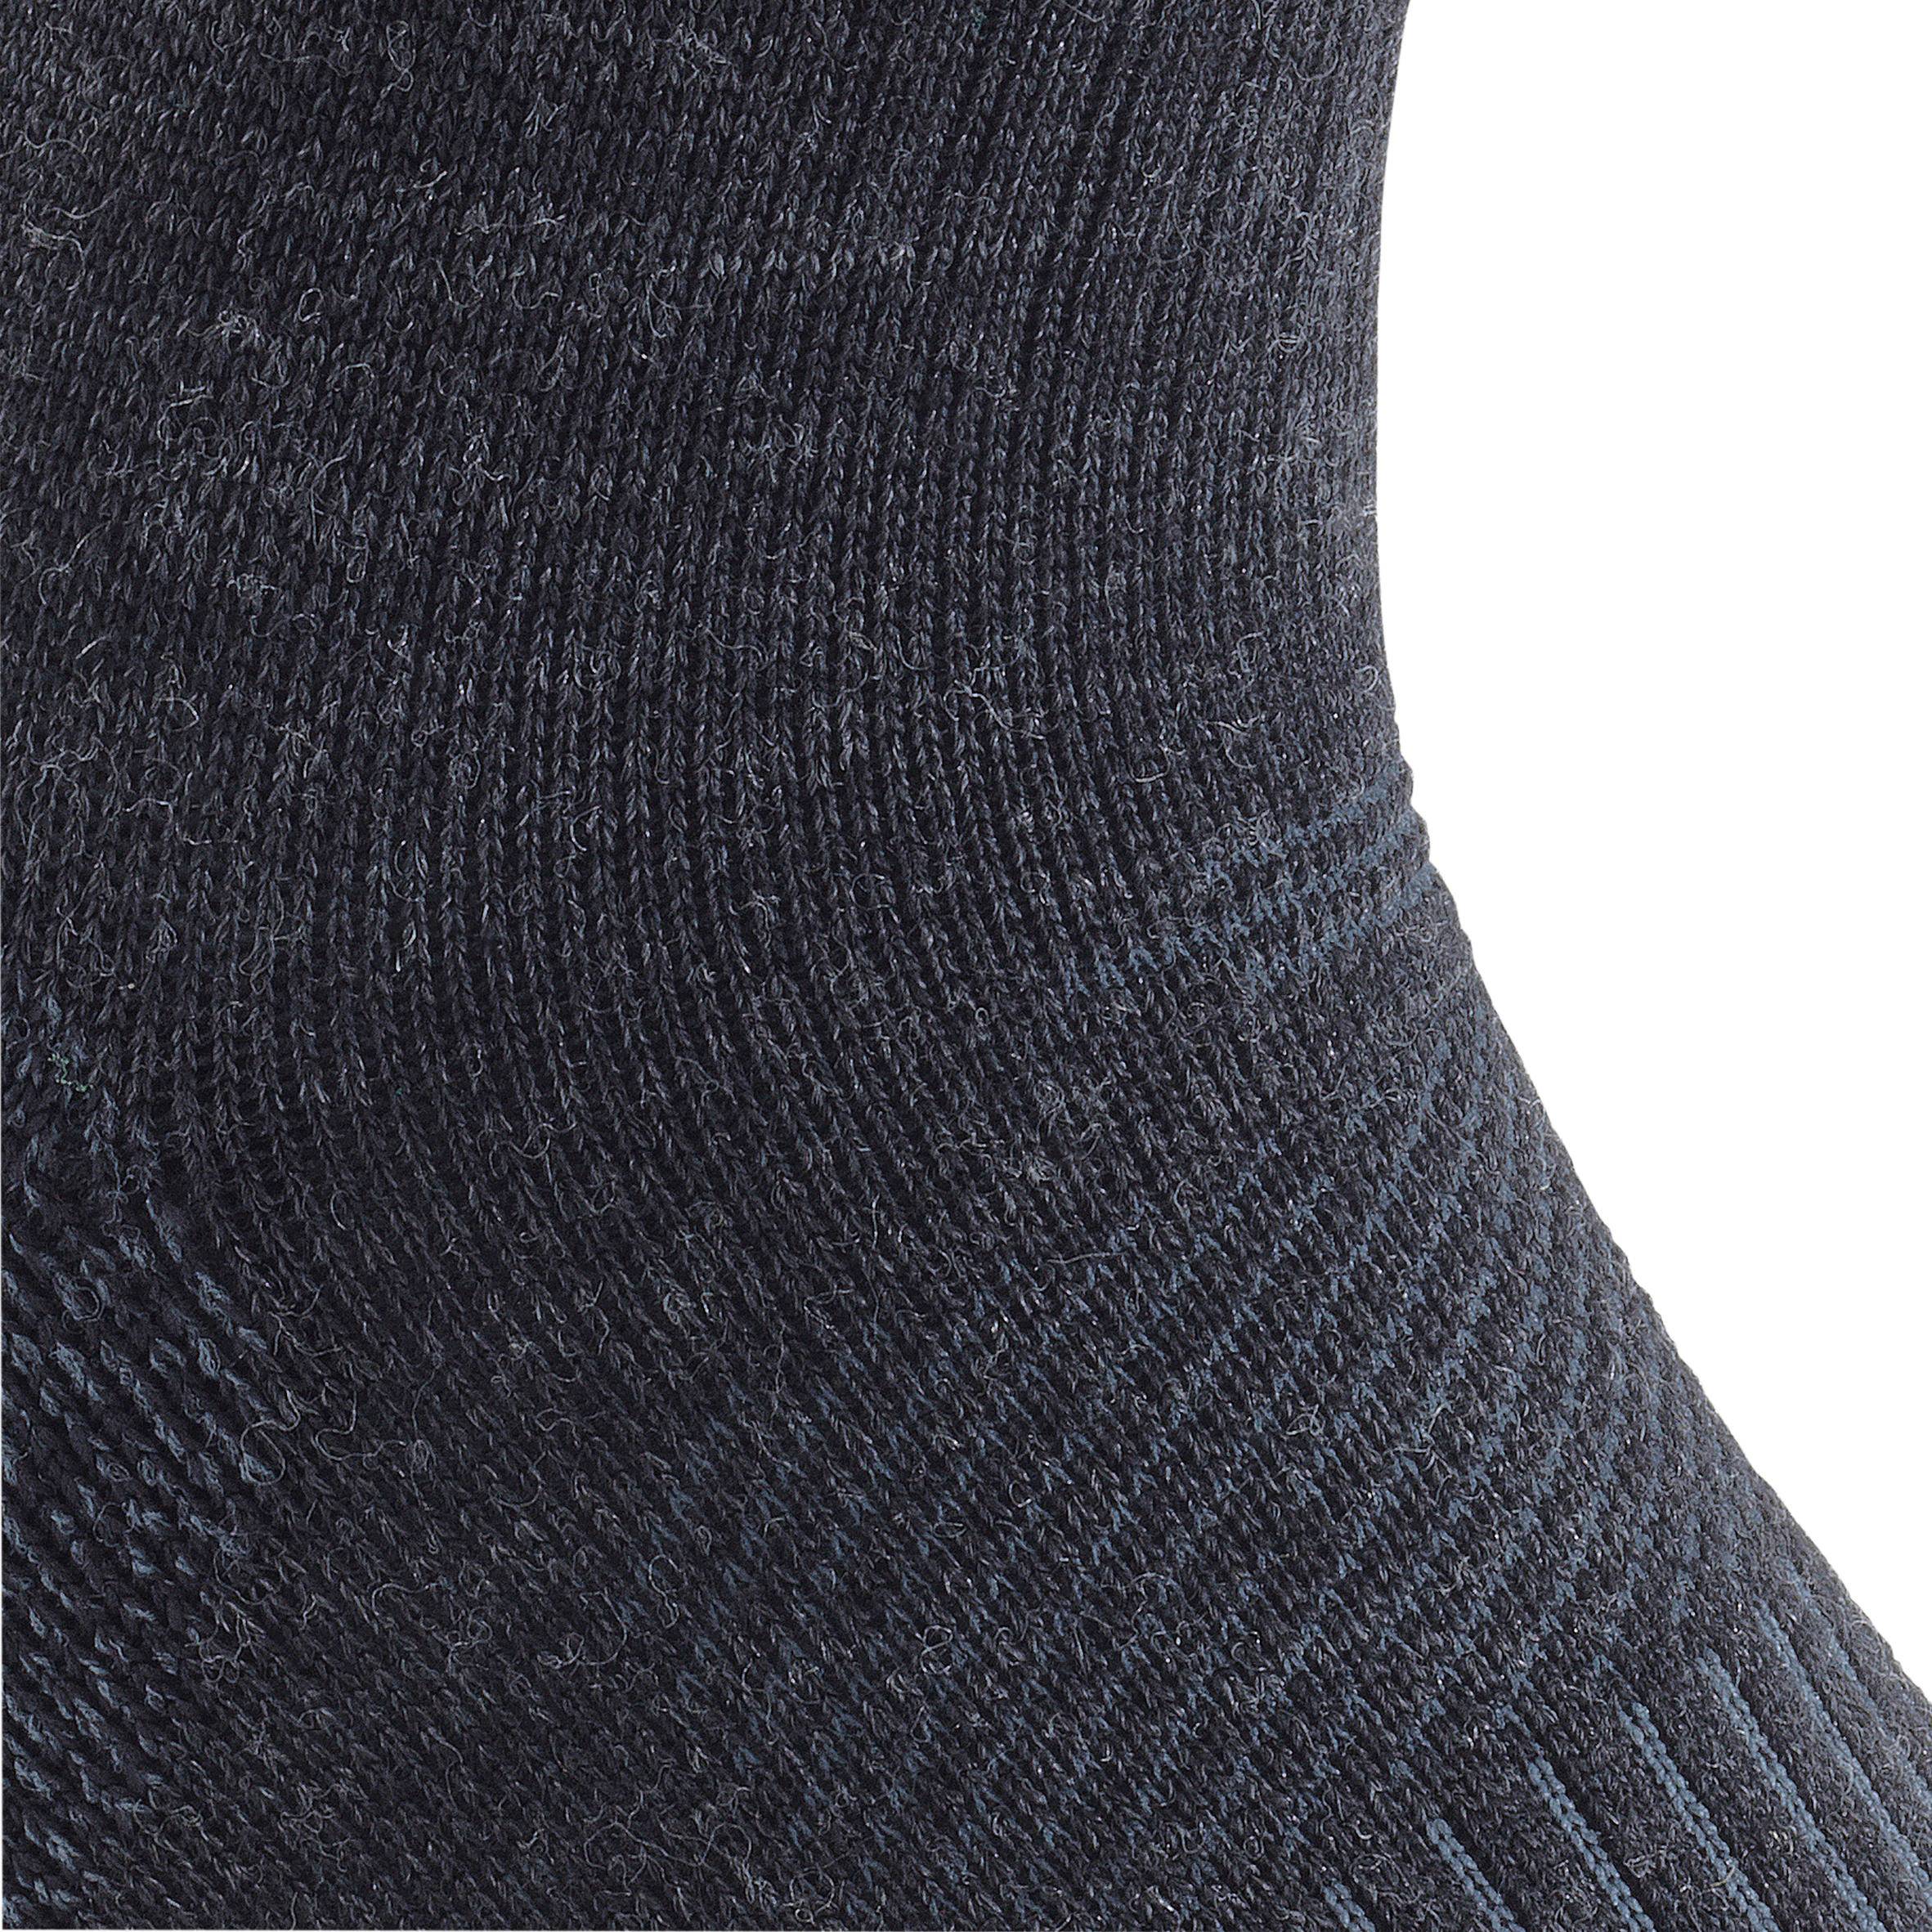 WS 580 Warm Fitness/Nordic walking Socks - Black 4/5